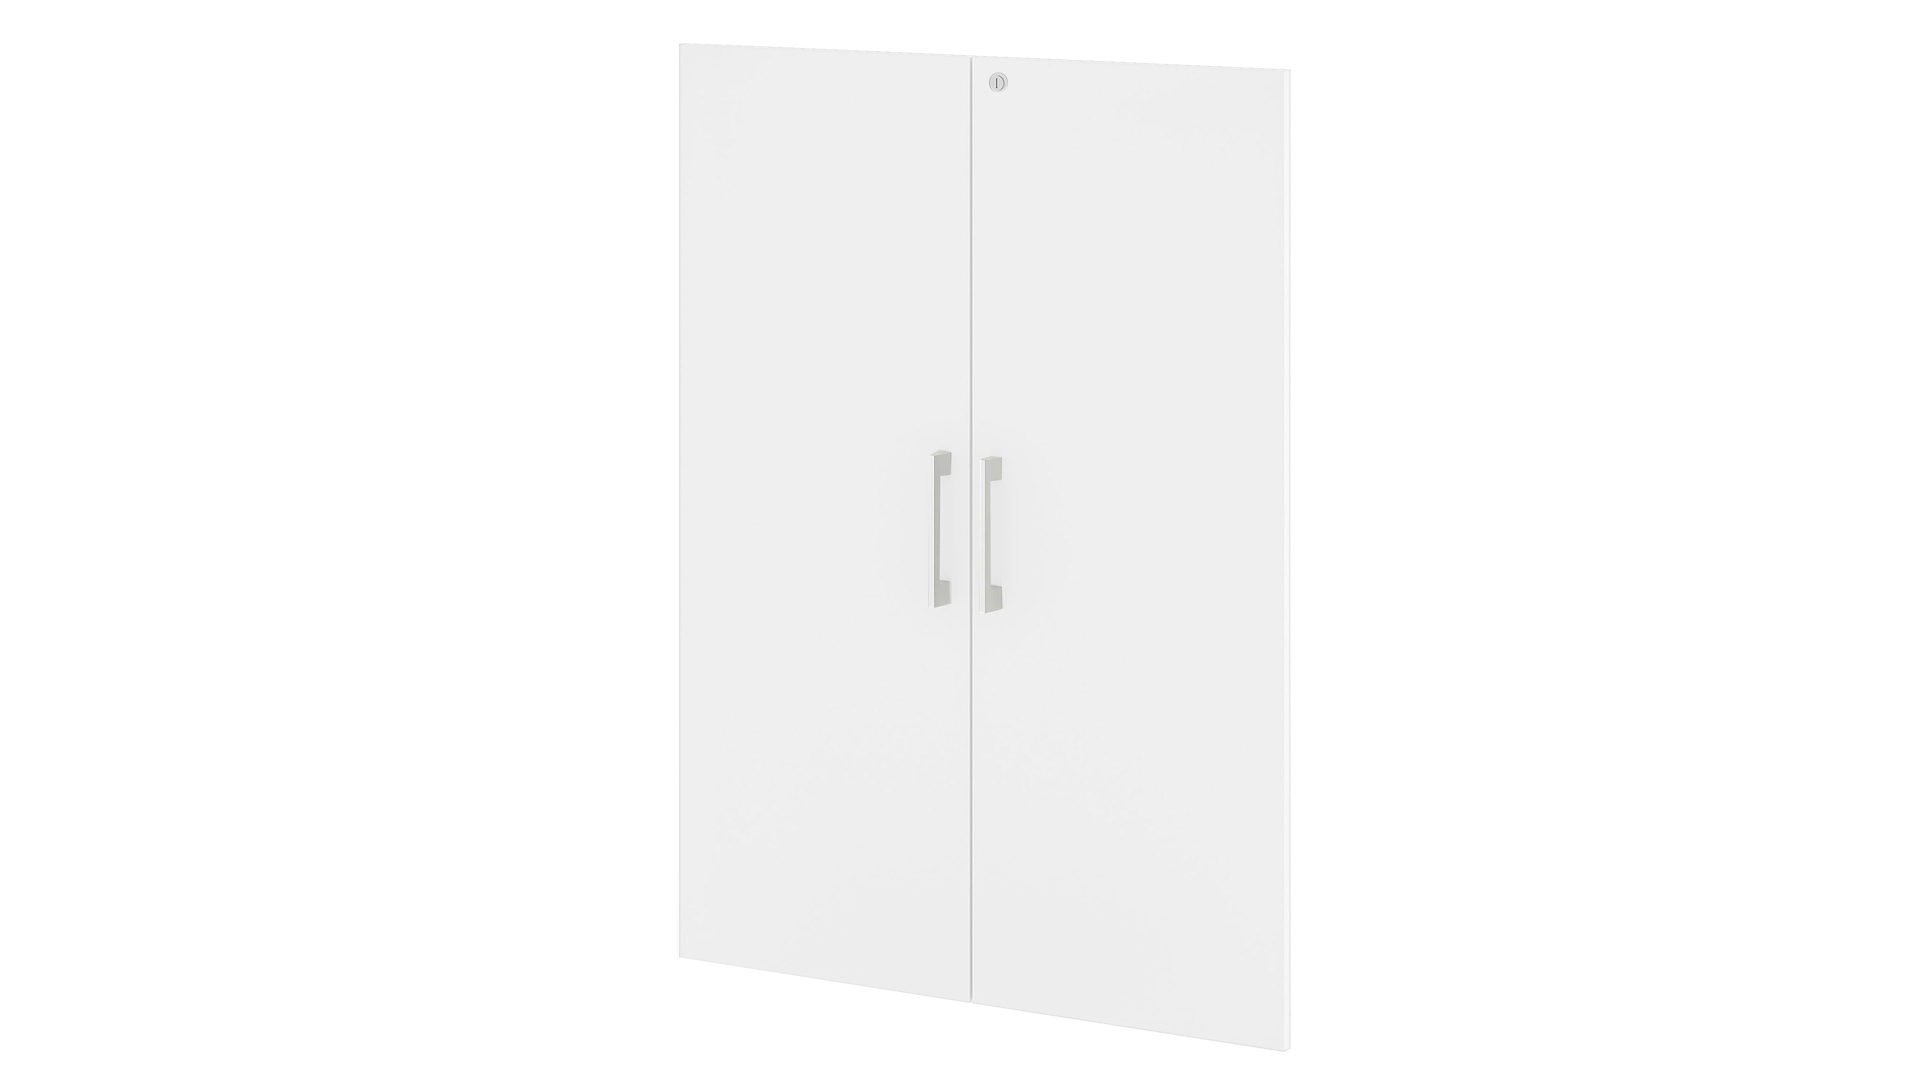 Türen-Set Mäusbacher aus Holz in Weiß Büroprogramm Big Profi Office - 2er-Set Türen Weiß - zwei Türen, ca. 77 x 104 cm